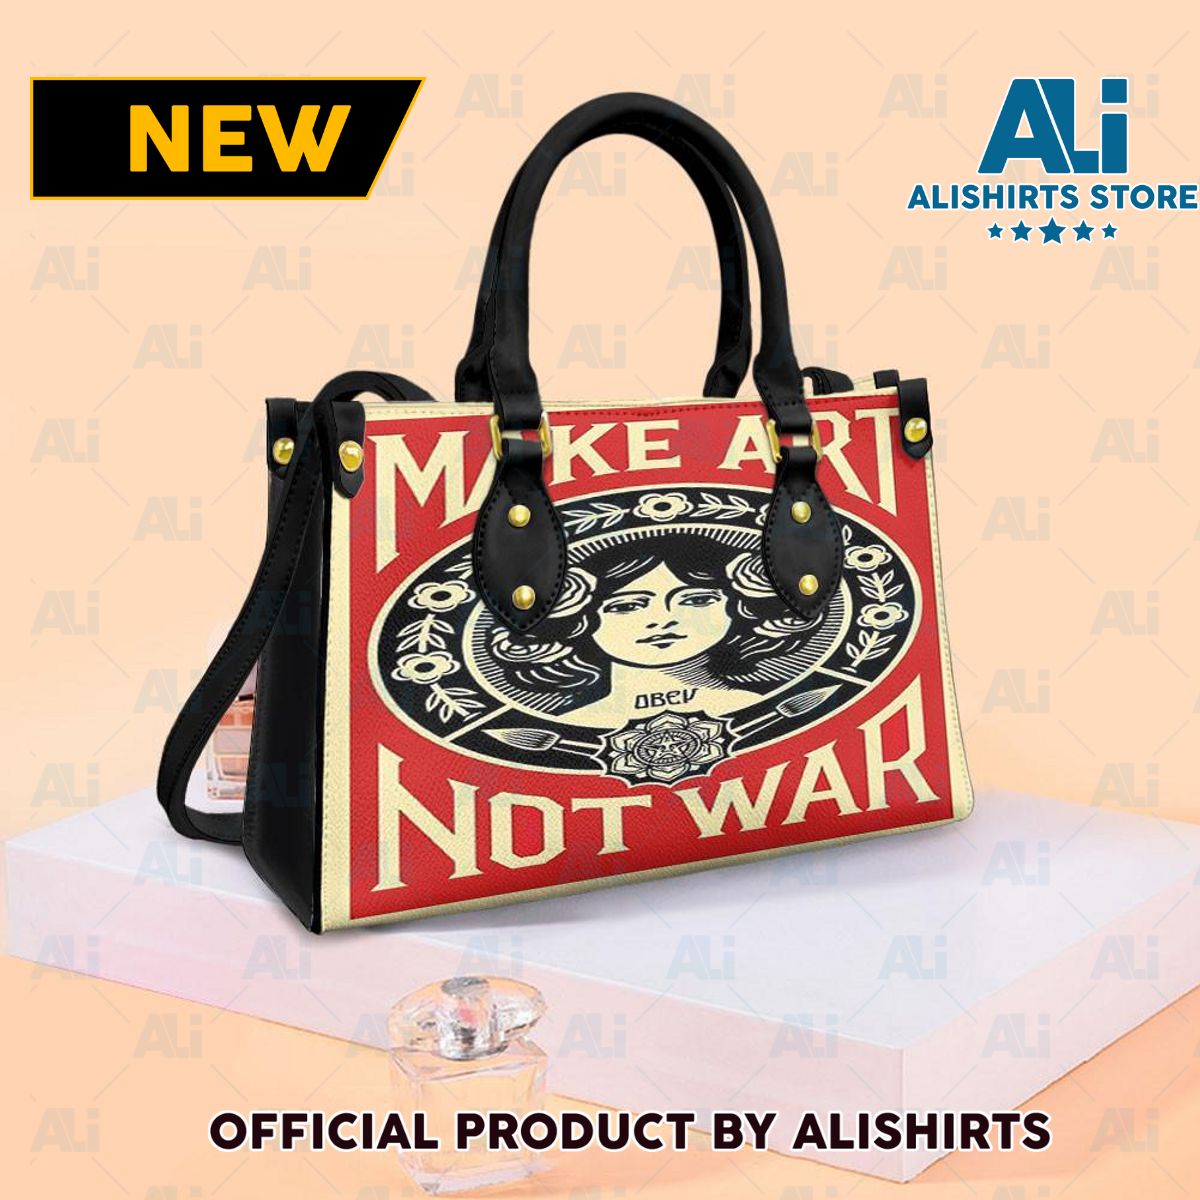 Make Art Not War Personalized Leather HandBags Women Tote Bag